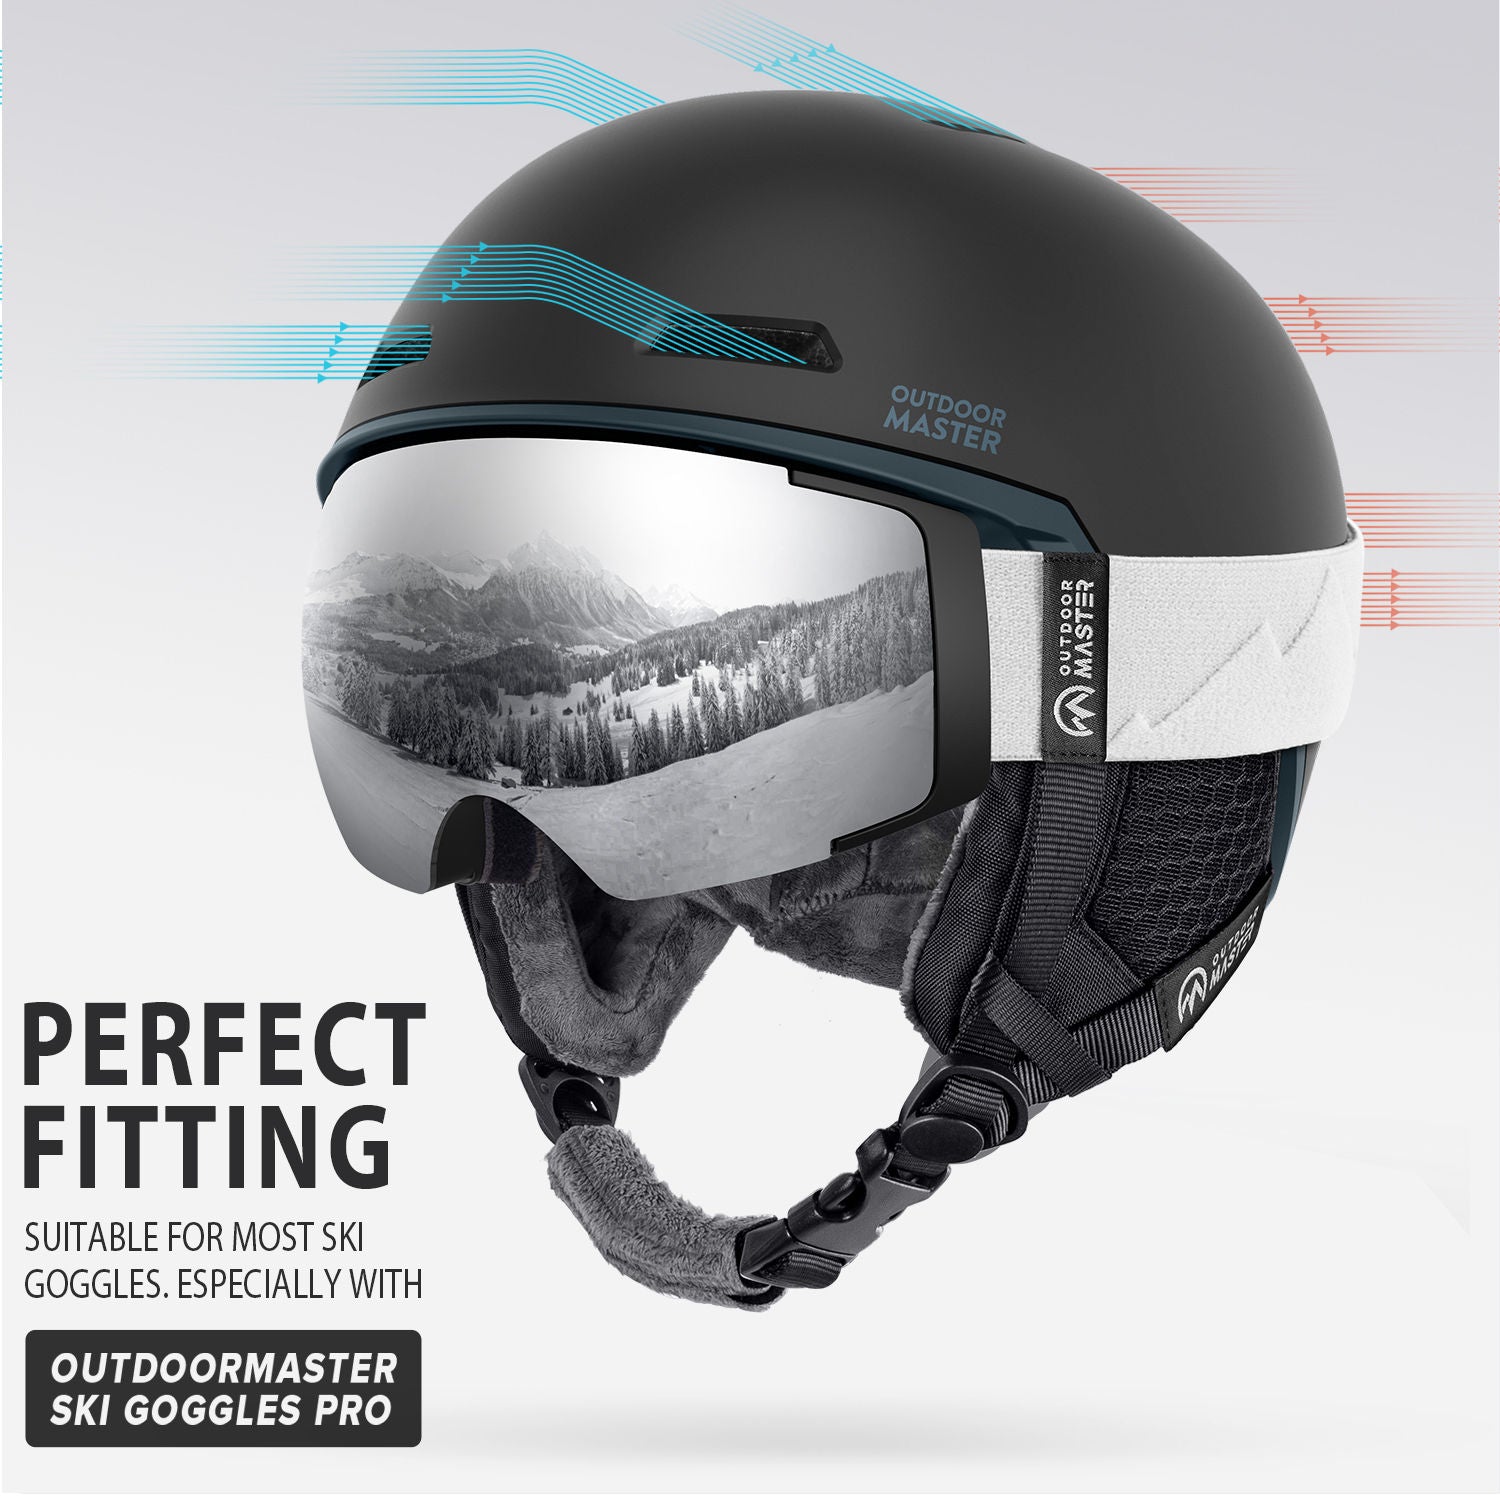 How Should a Ski or Snowboard Helmet Fit?